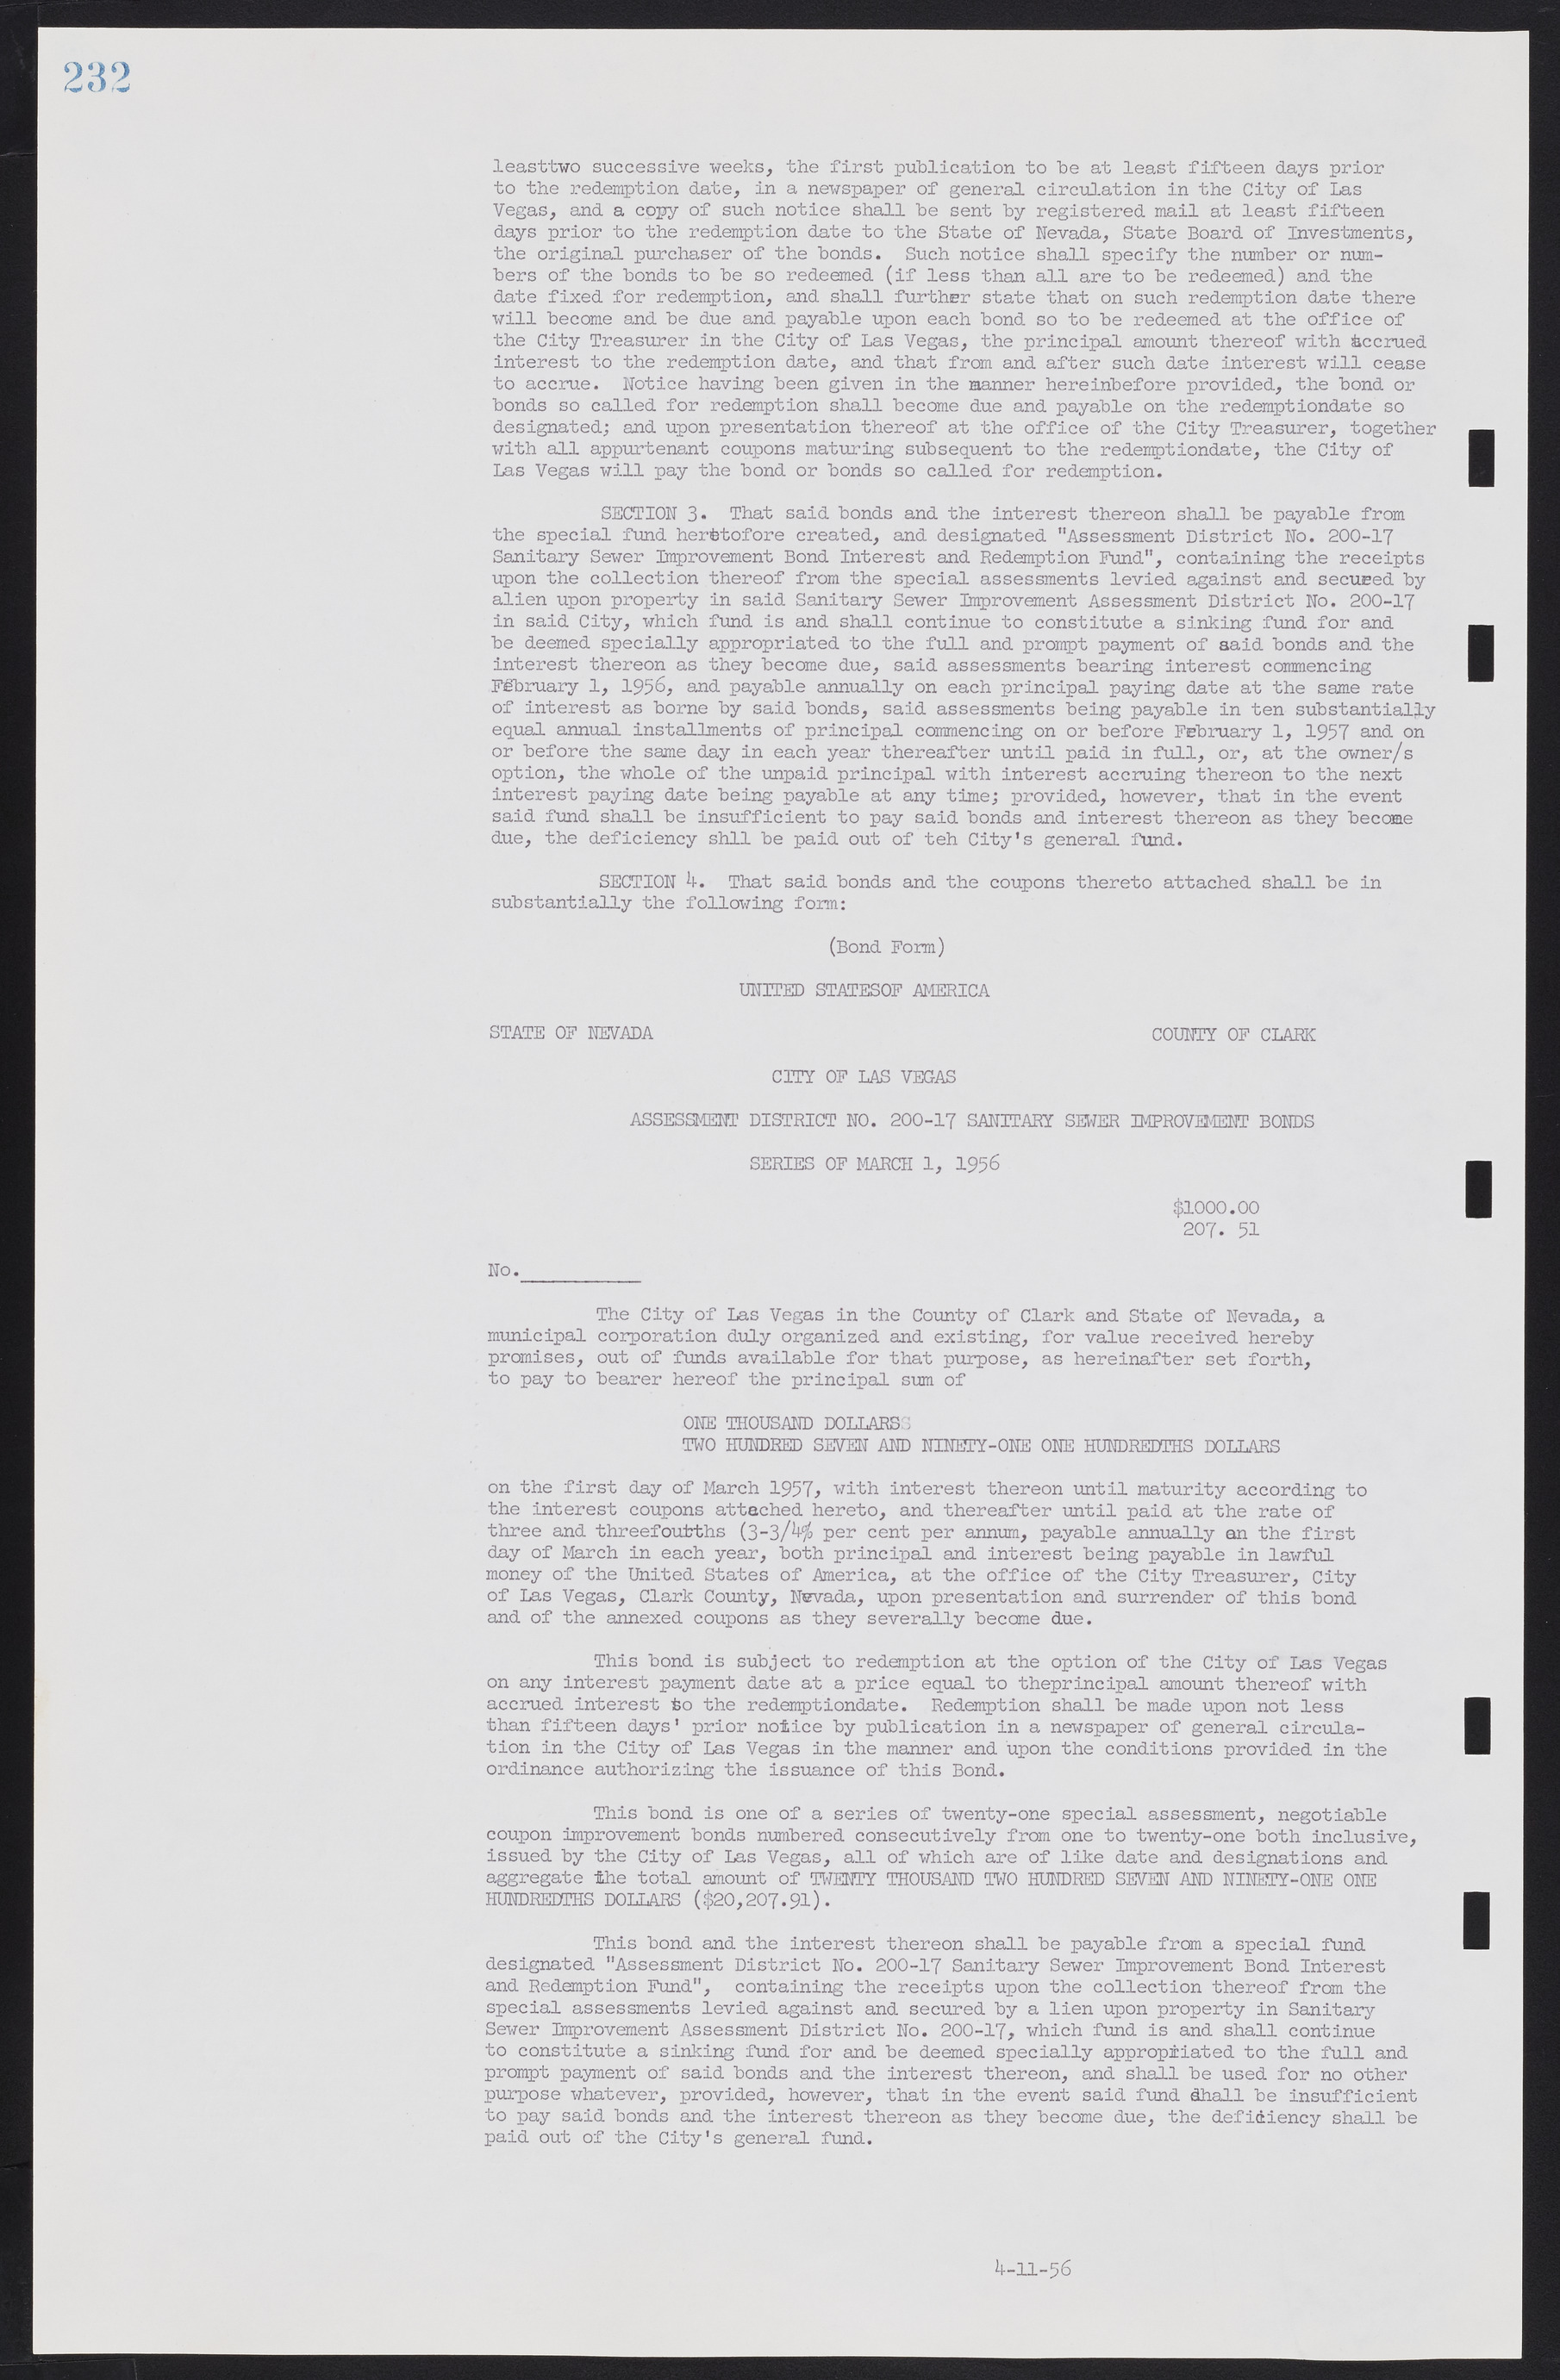 Las Vegas City Commission Minutes, September 21, 1955 to November 20, 1957, lvc000010-250